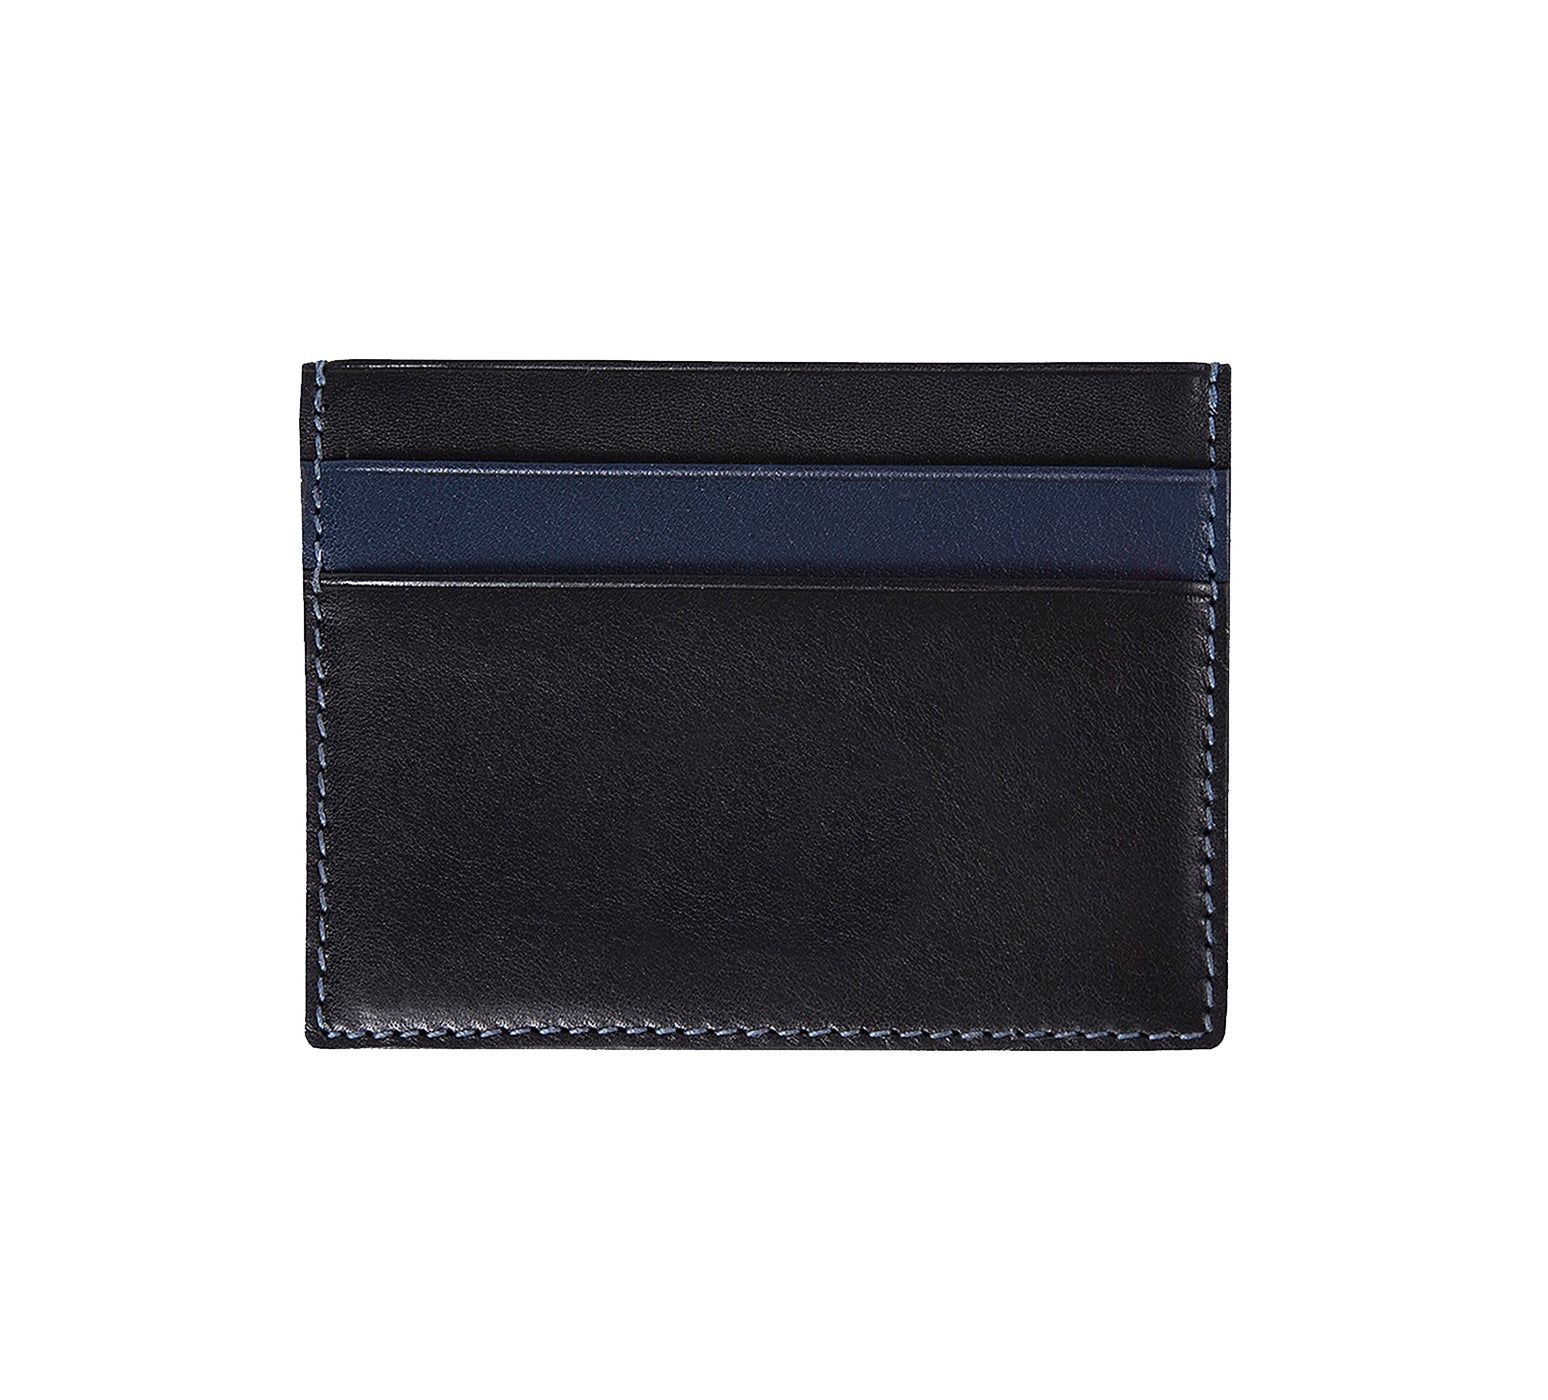 Mens Leather Card Holder in 'Black/Royal Blue' showing reverse side.